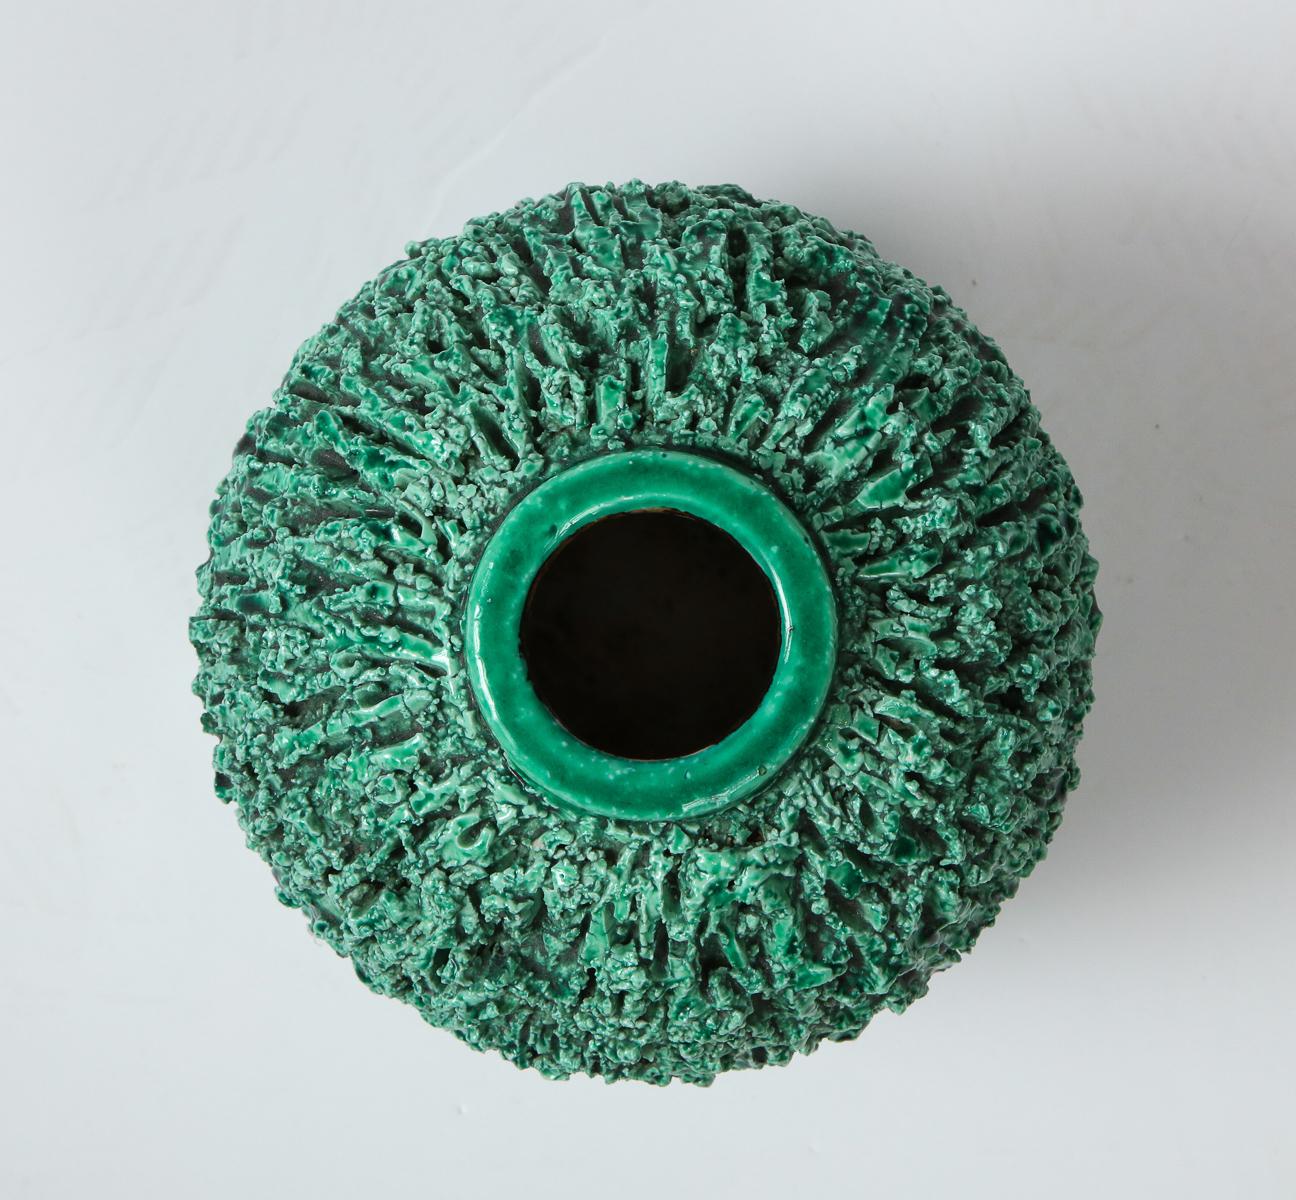 Vase en céramique de Gunnar Nylund, Scandinave, Vase vert, 